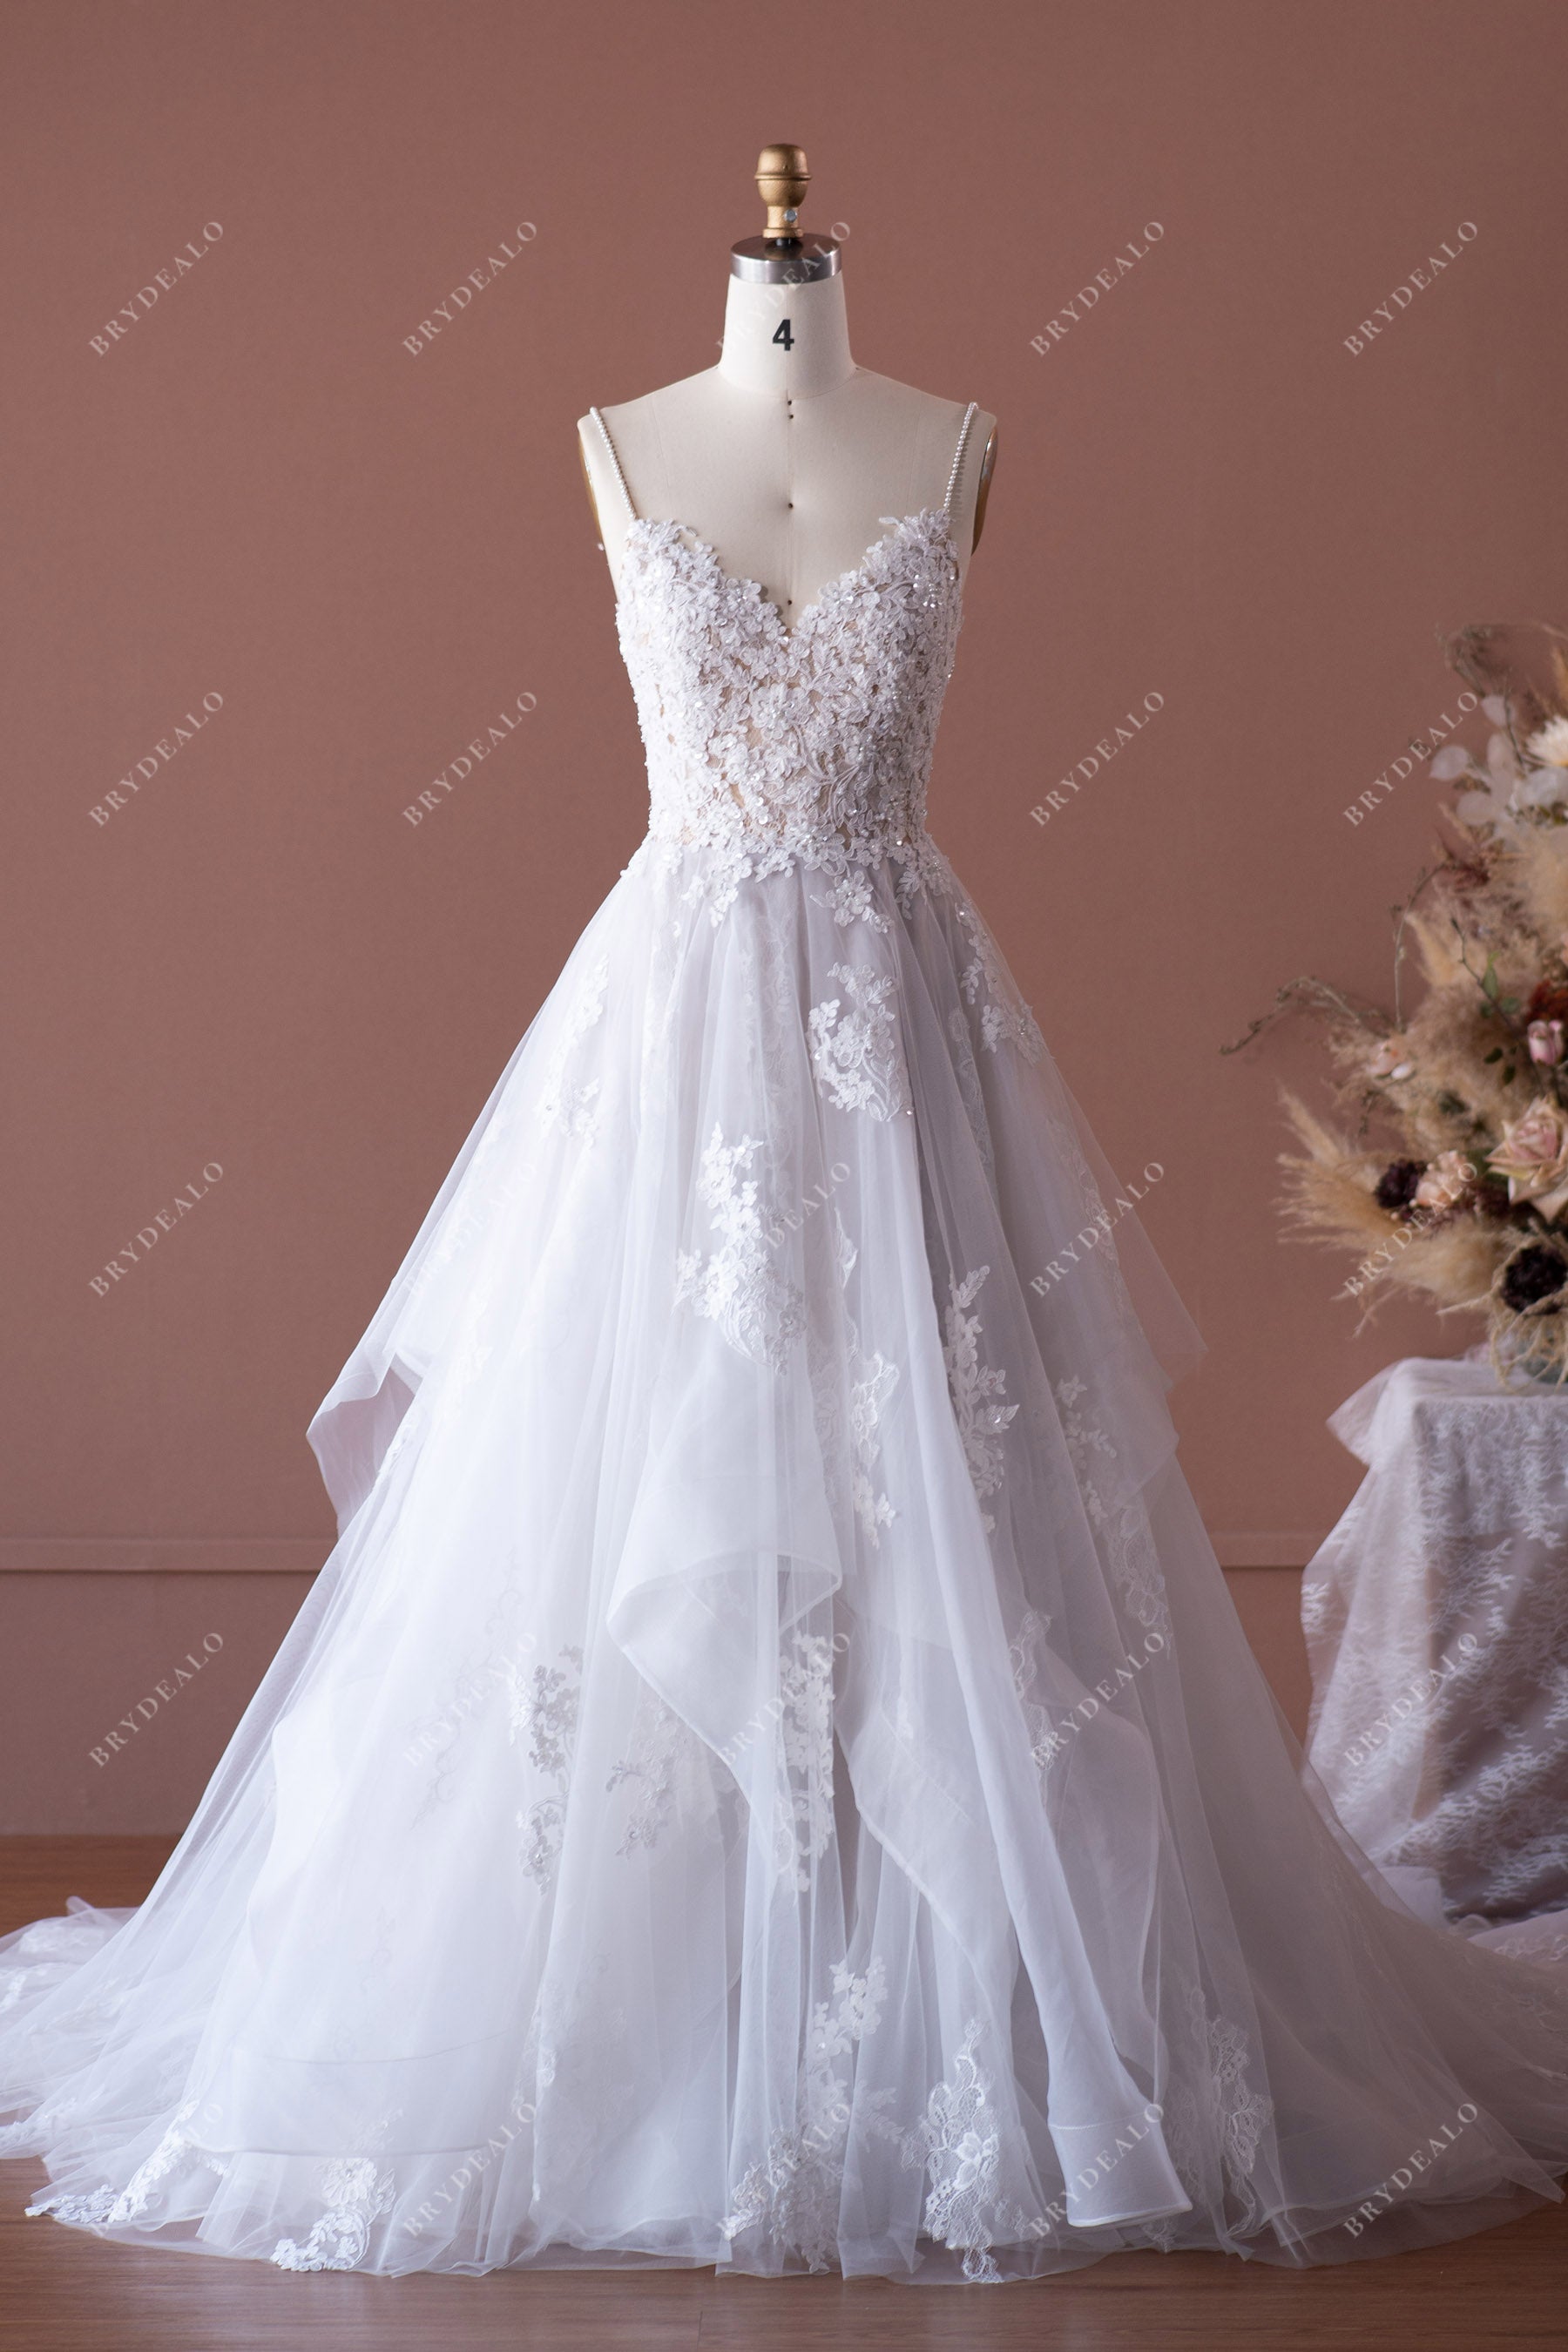 Spaghetti Strap Lace Puffy Ruffled Wedding Dress Sample Sale 